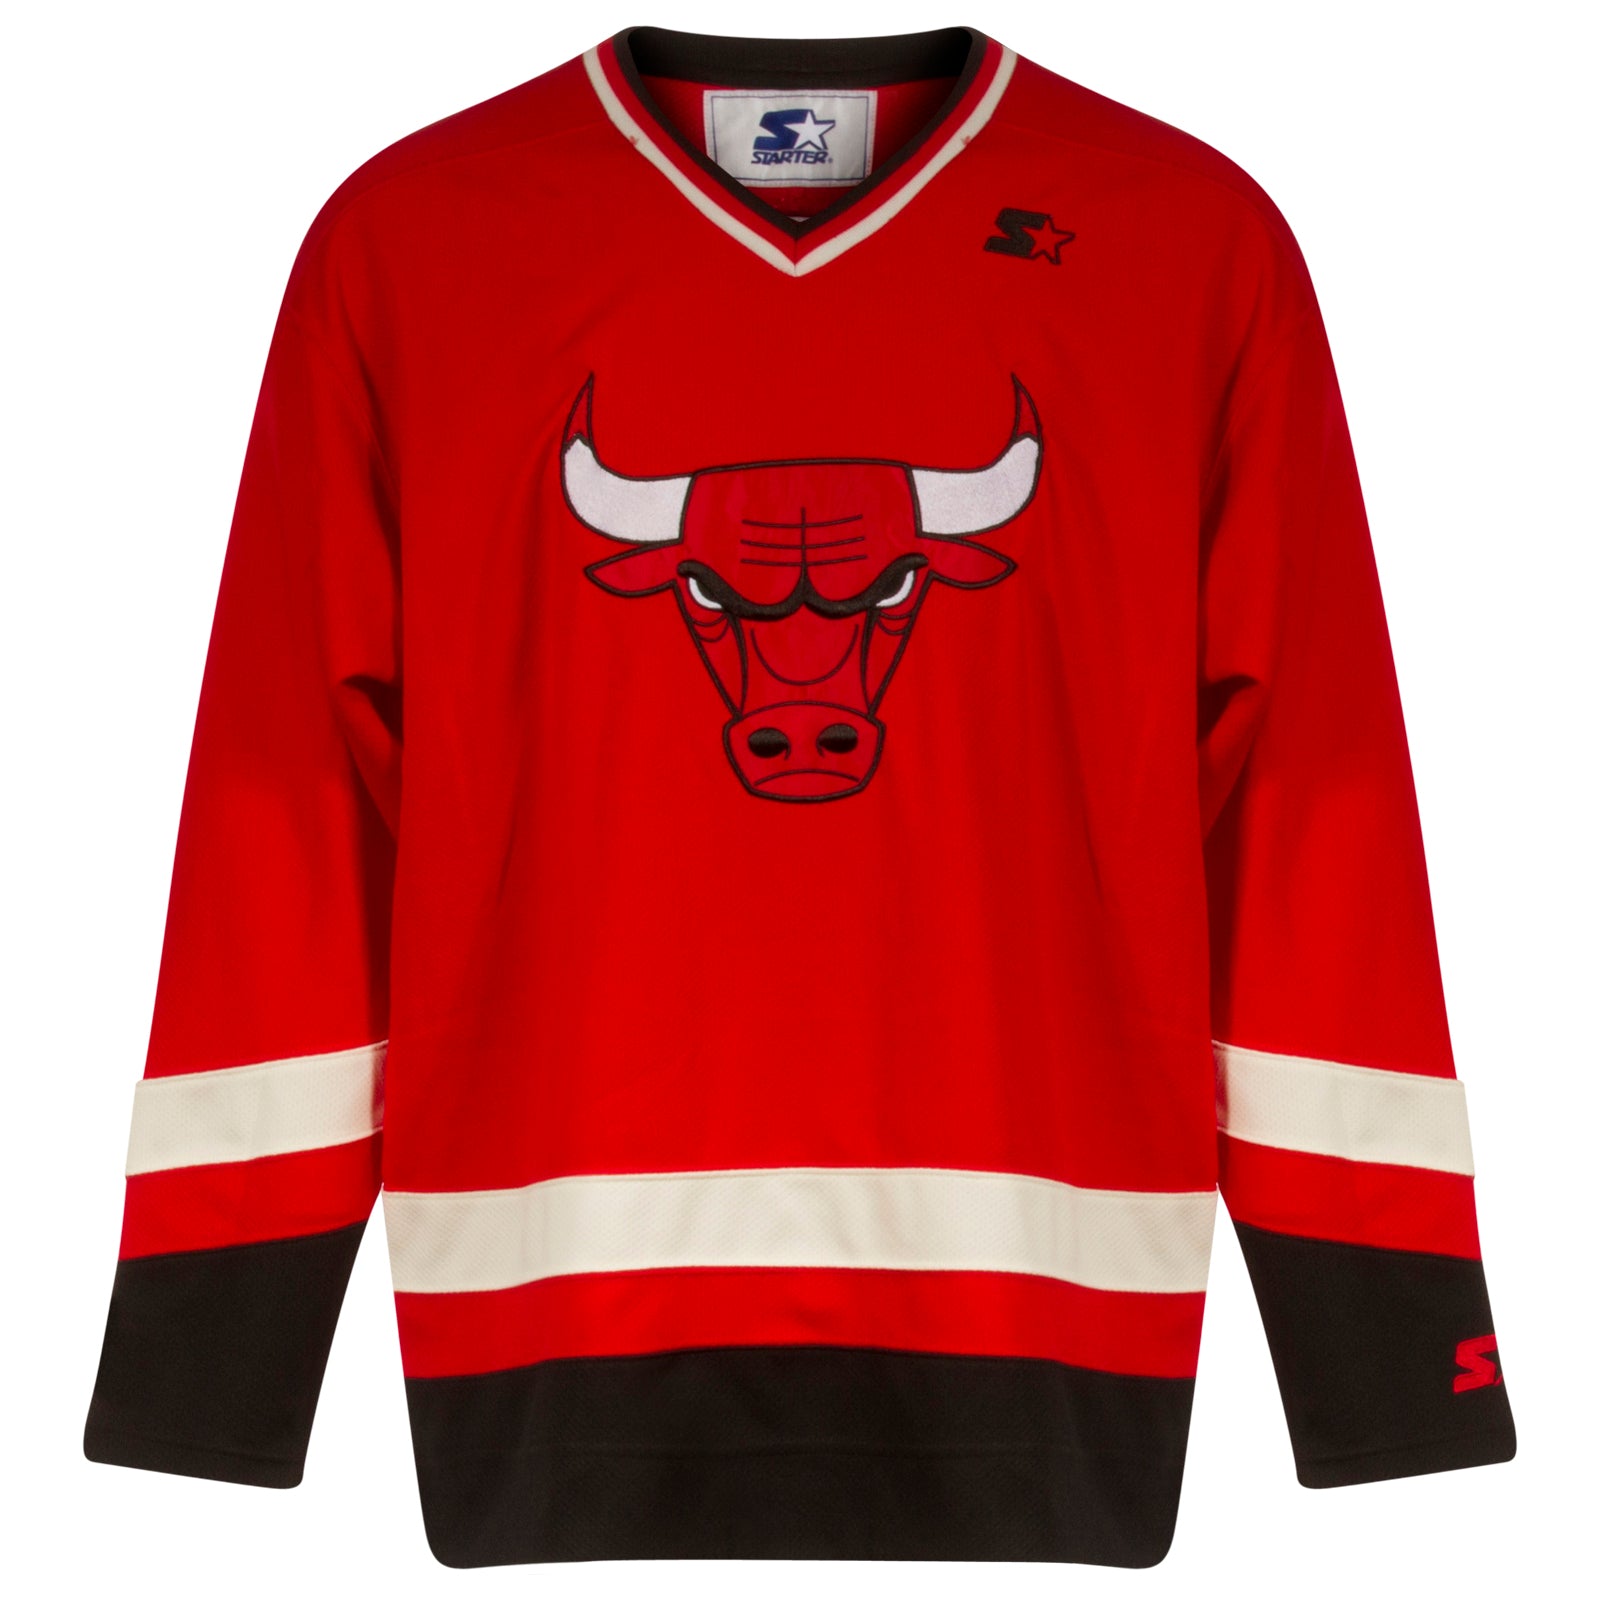 chicago bulls button up jersey